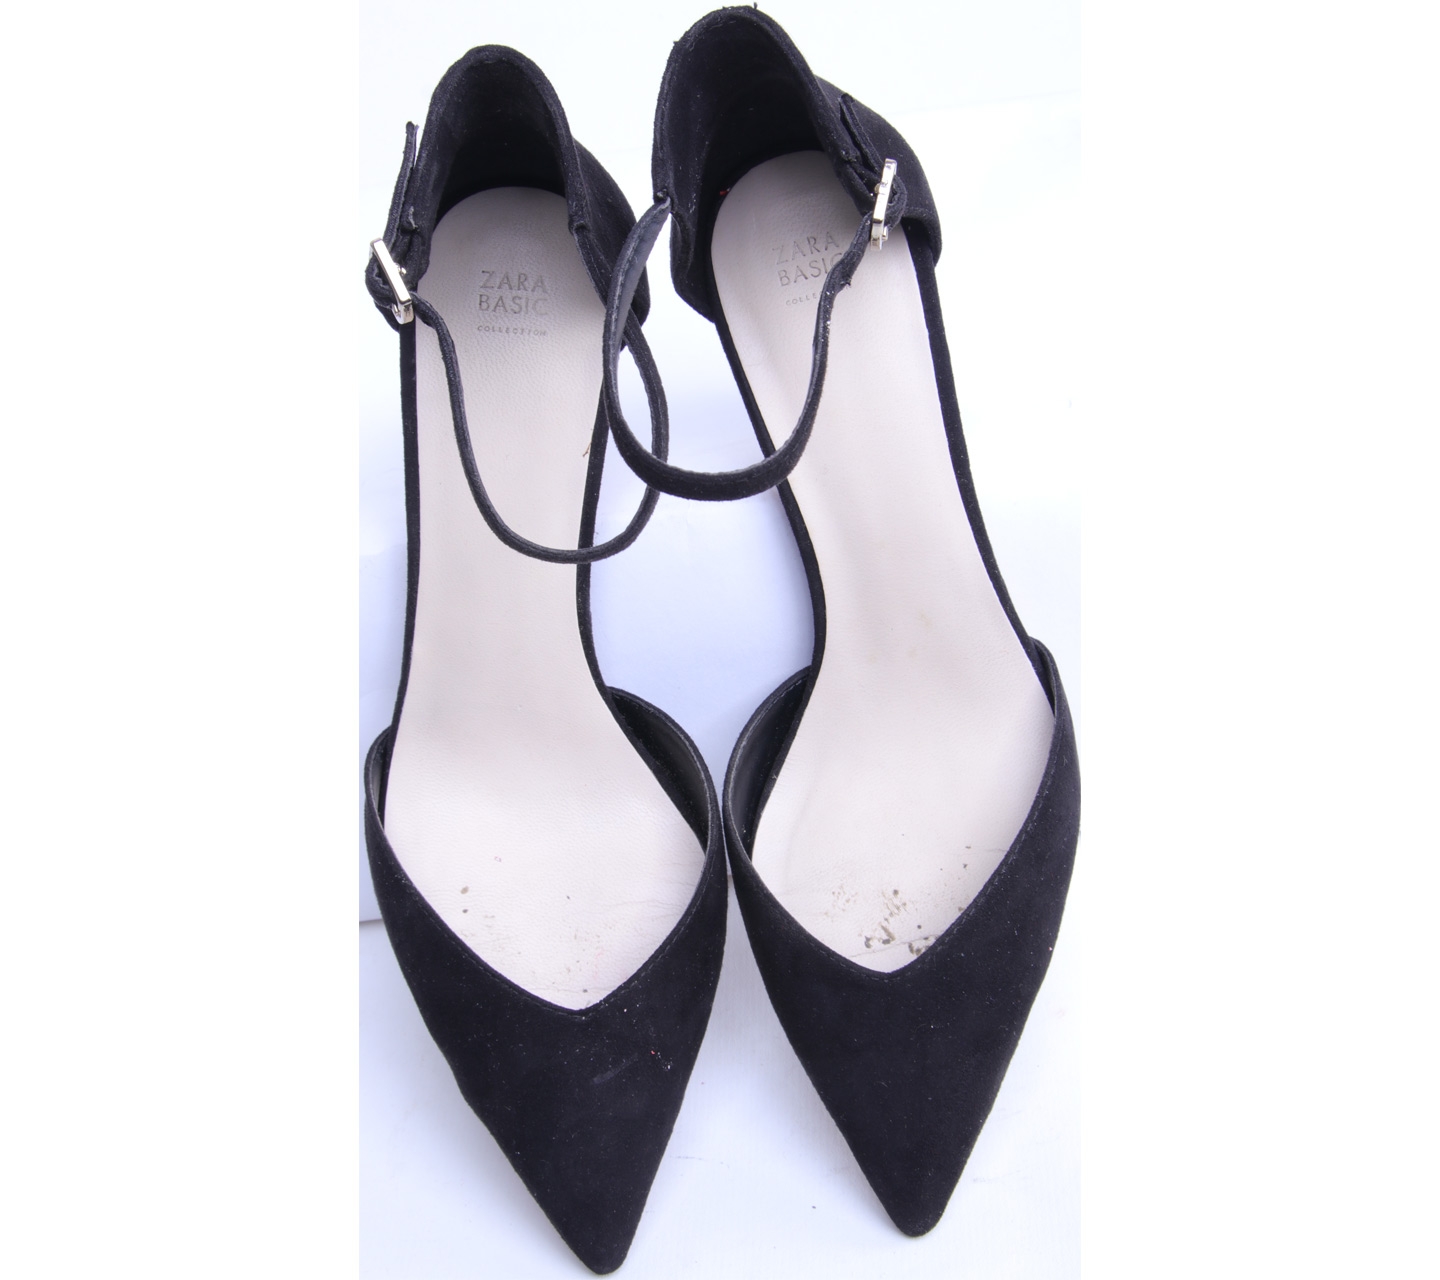 Zara Black D'Orsay Pump Heels